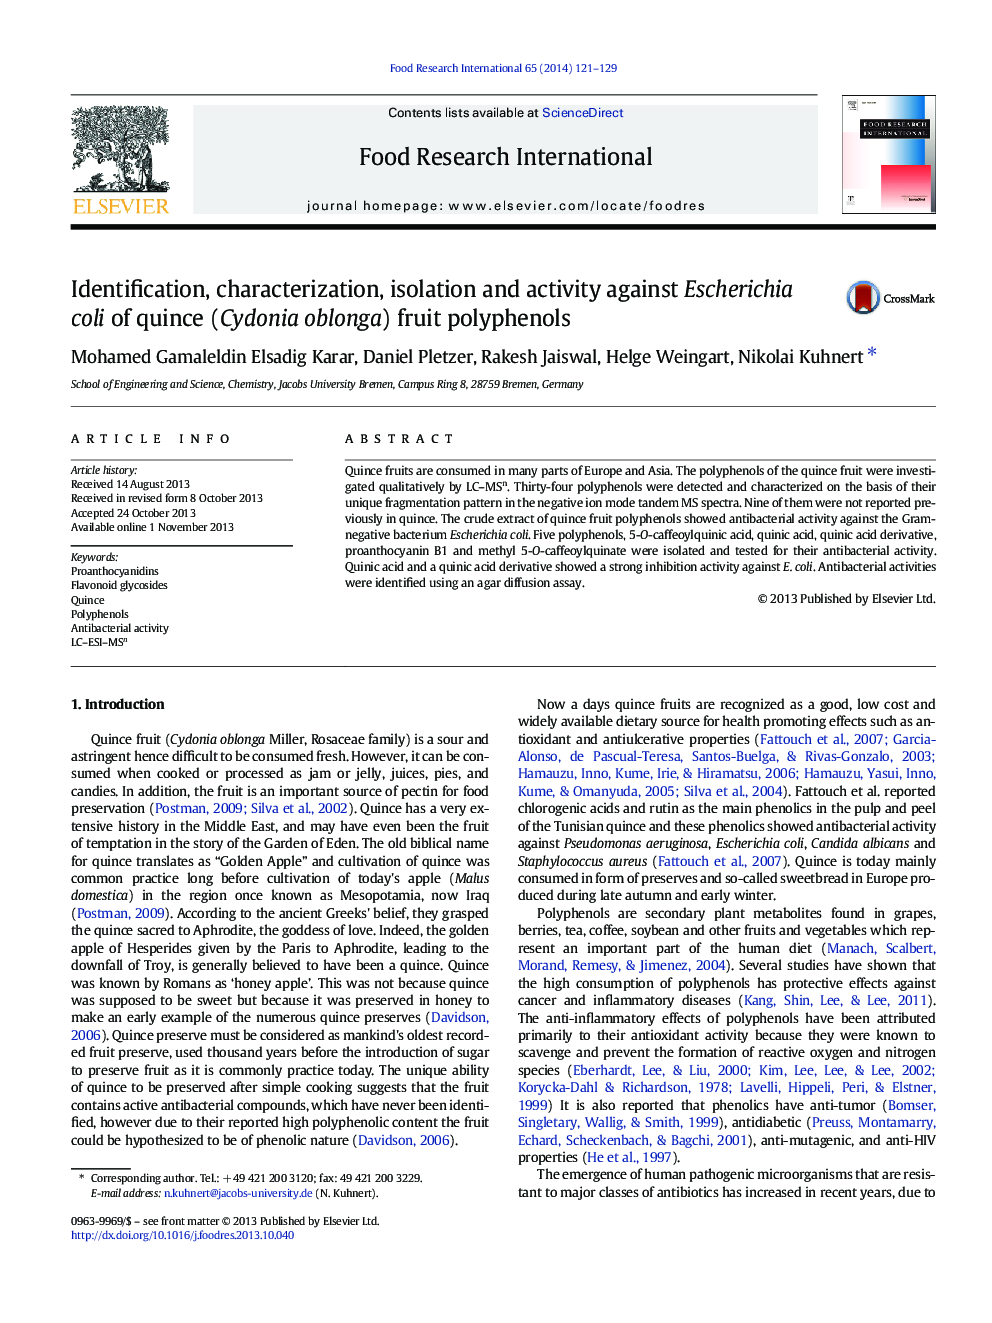 Identification, characterization, isolation and activity against Escherichia coli of quince (Cydonia oblonga) fruit polyphenols